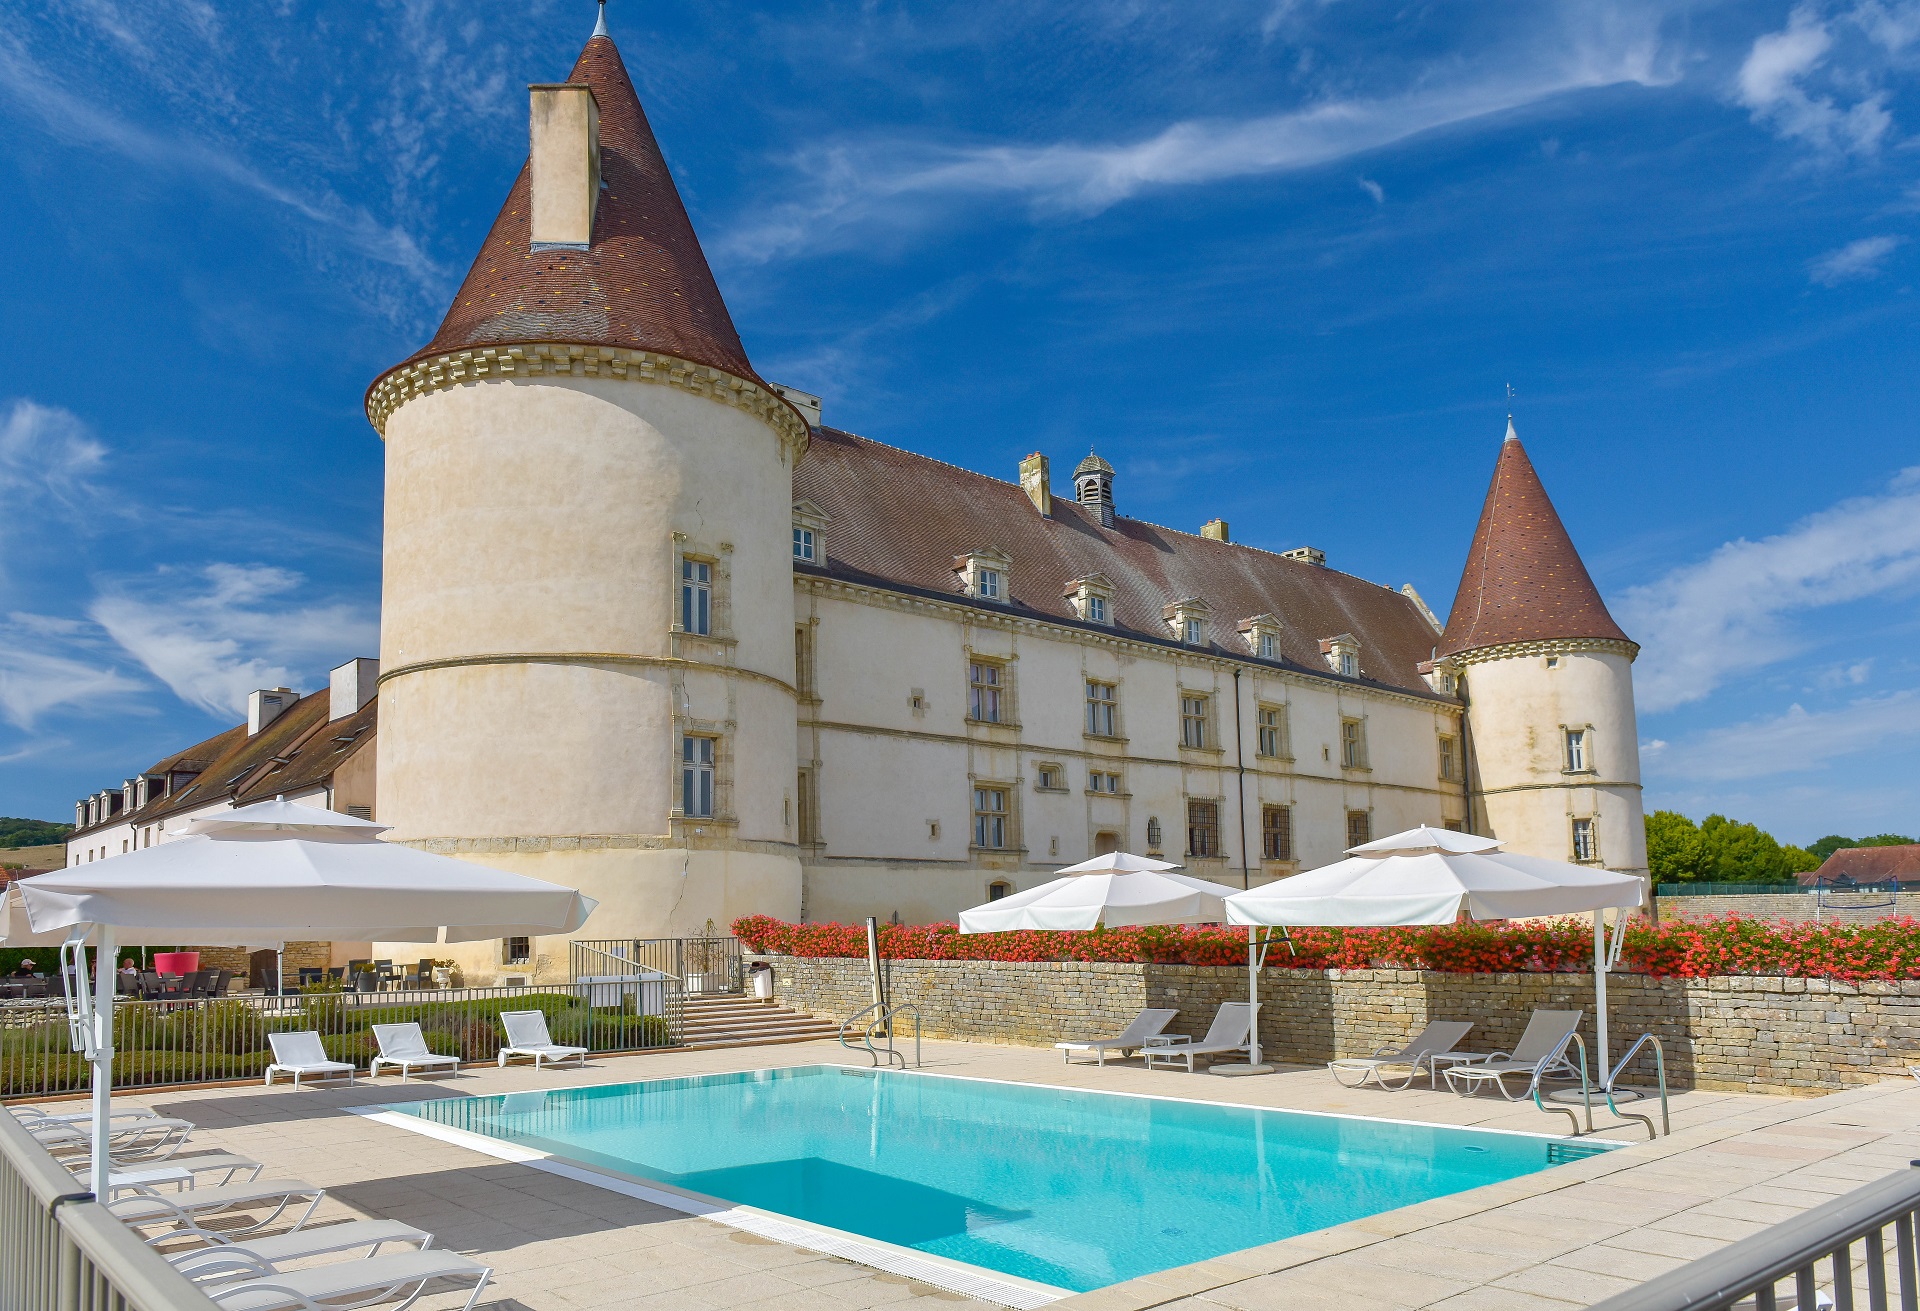 Chateau de Chailly Hotel & Golf